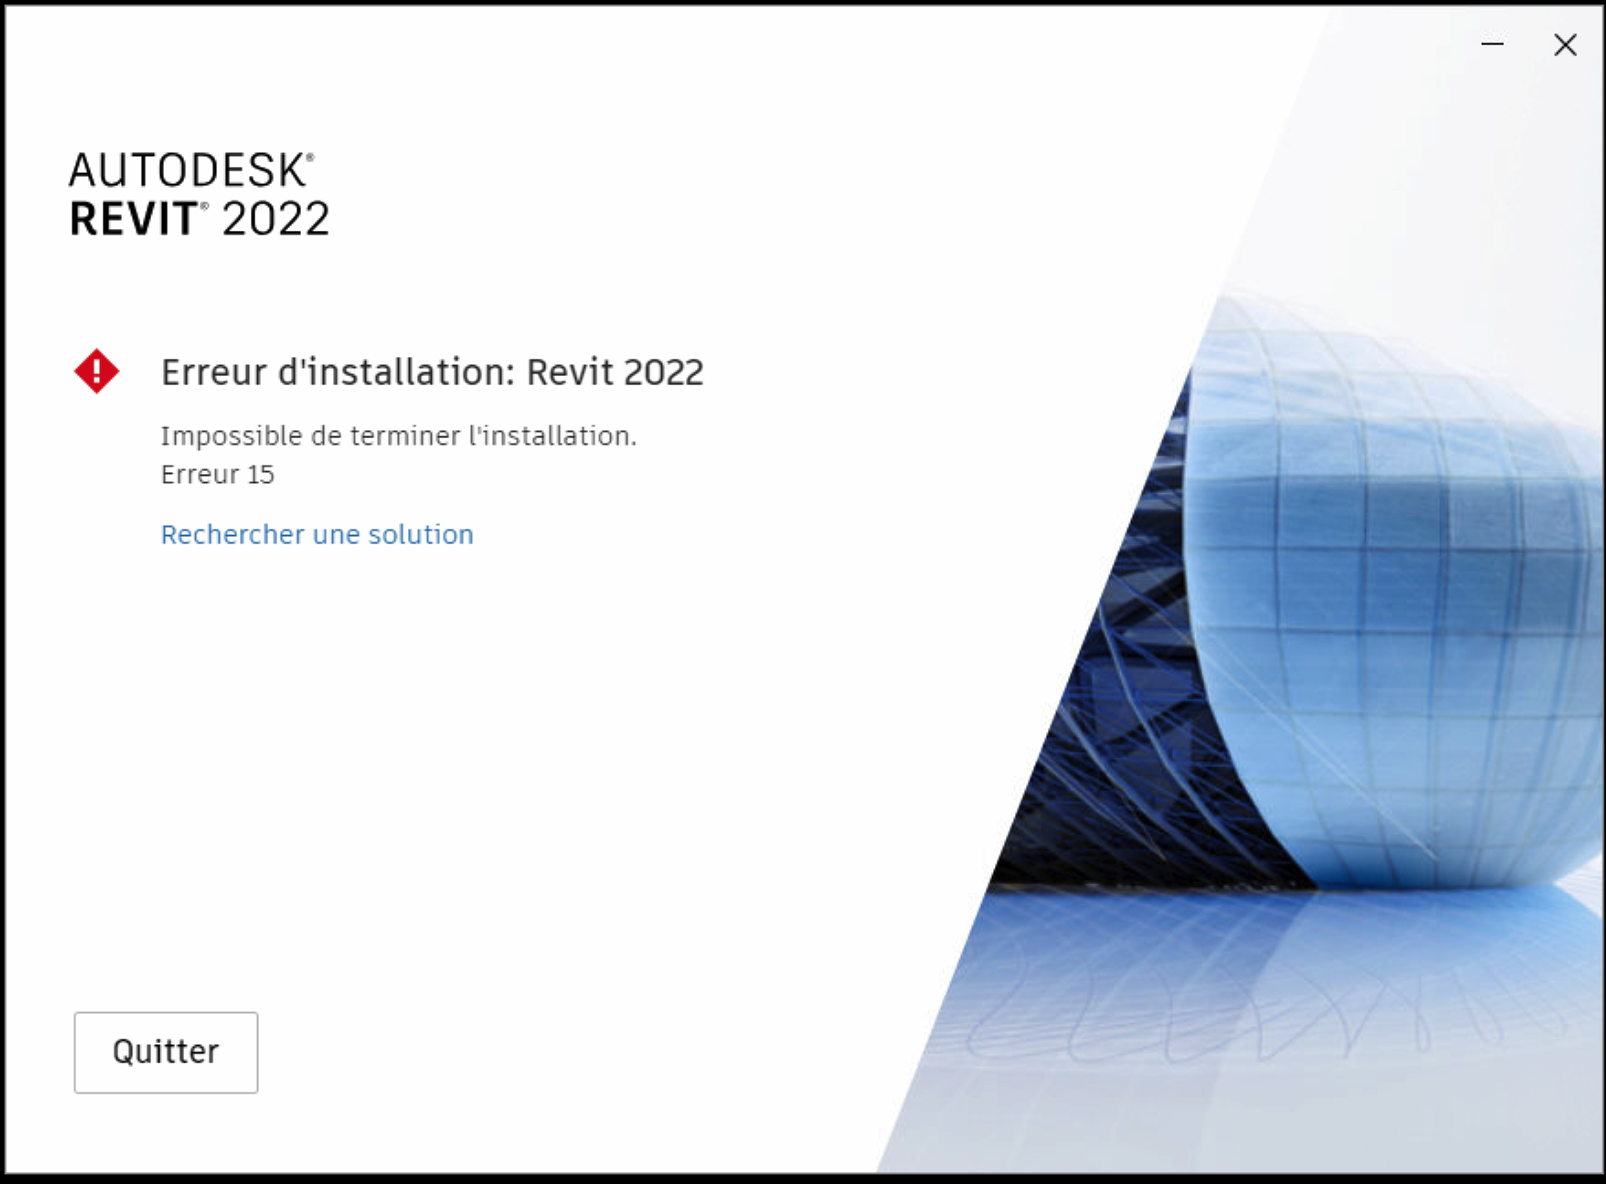 “Install error Revit 2022 The install couldn’t finish. Error 15” when